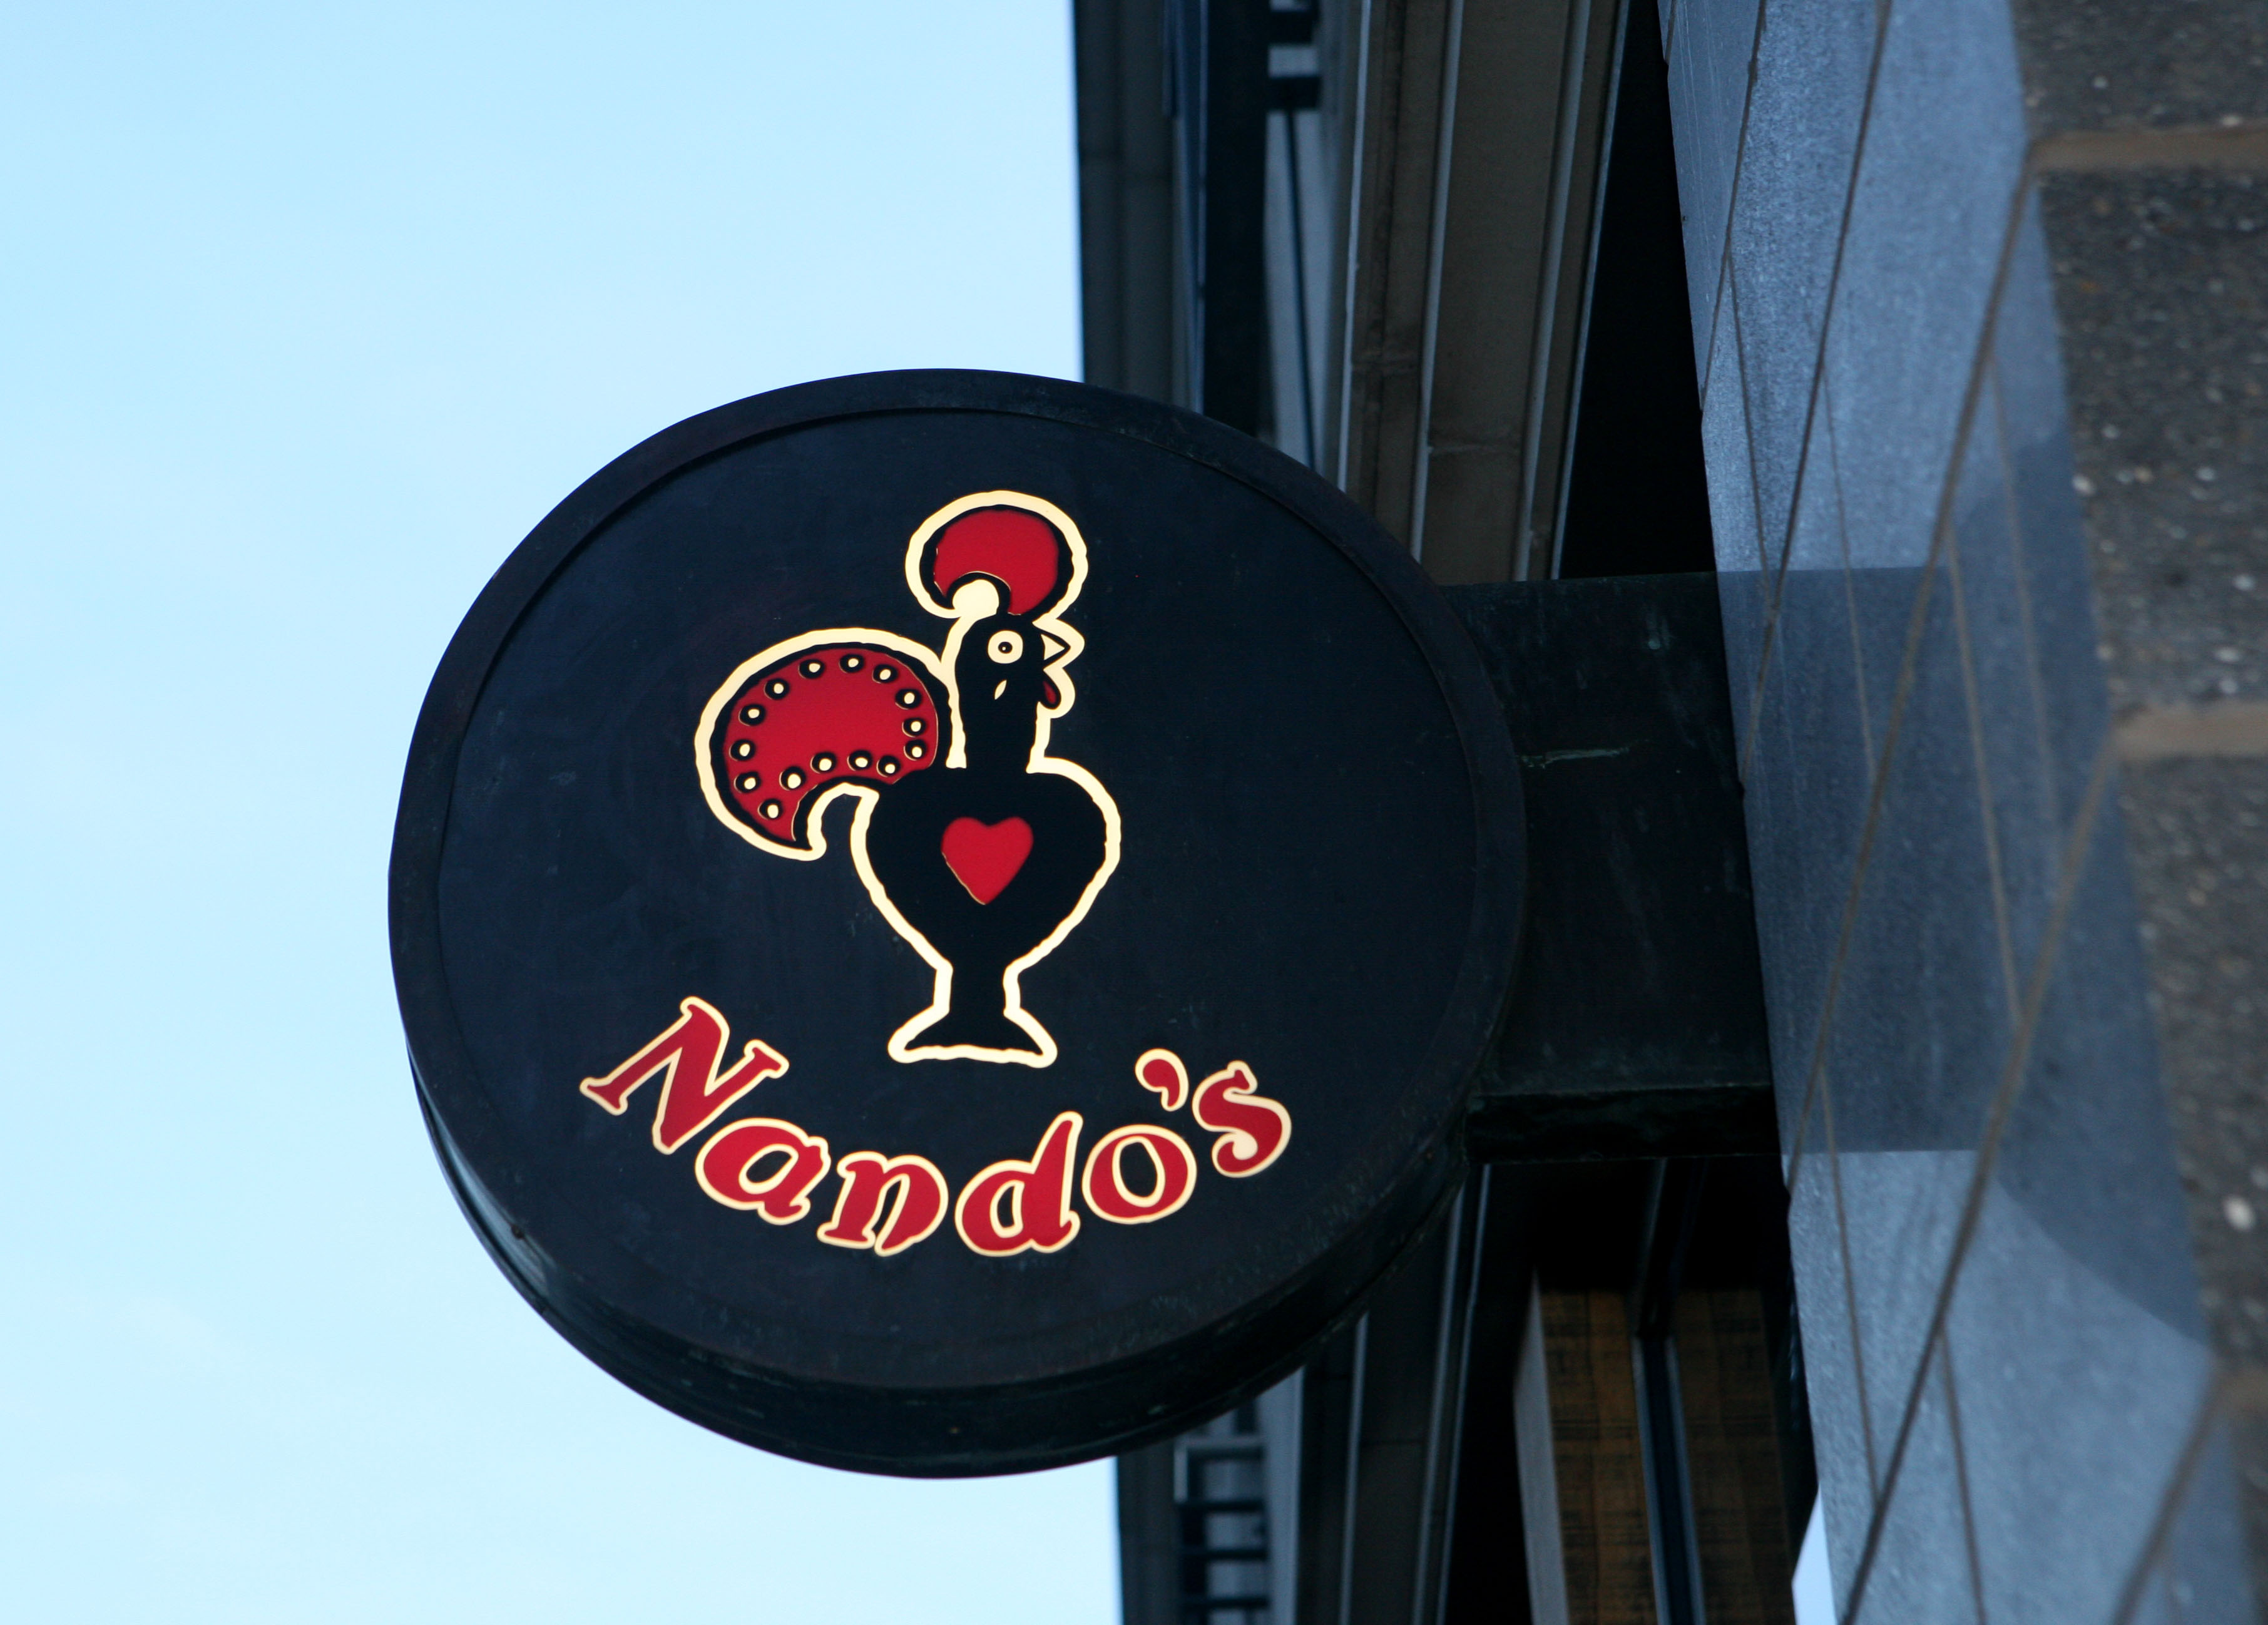 Nando's: Real-Time Marketing